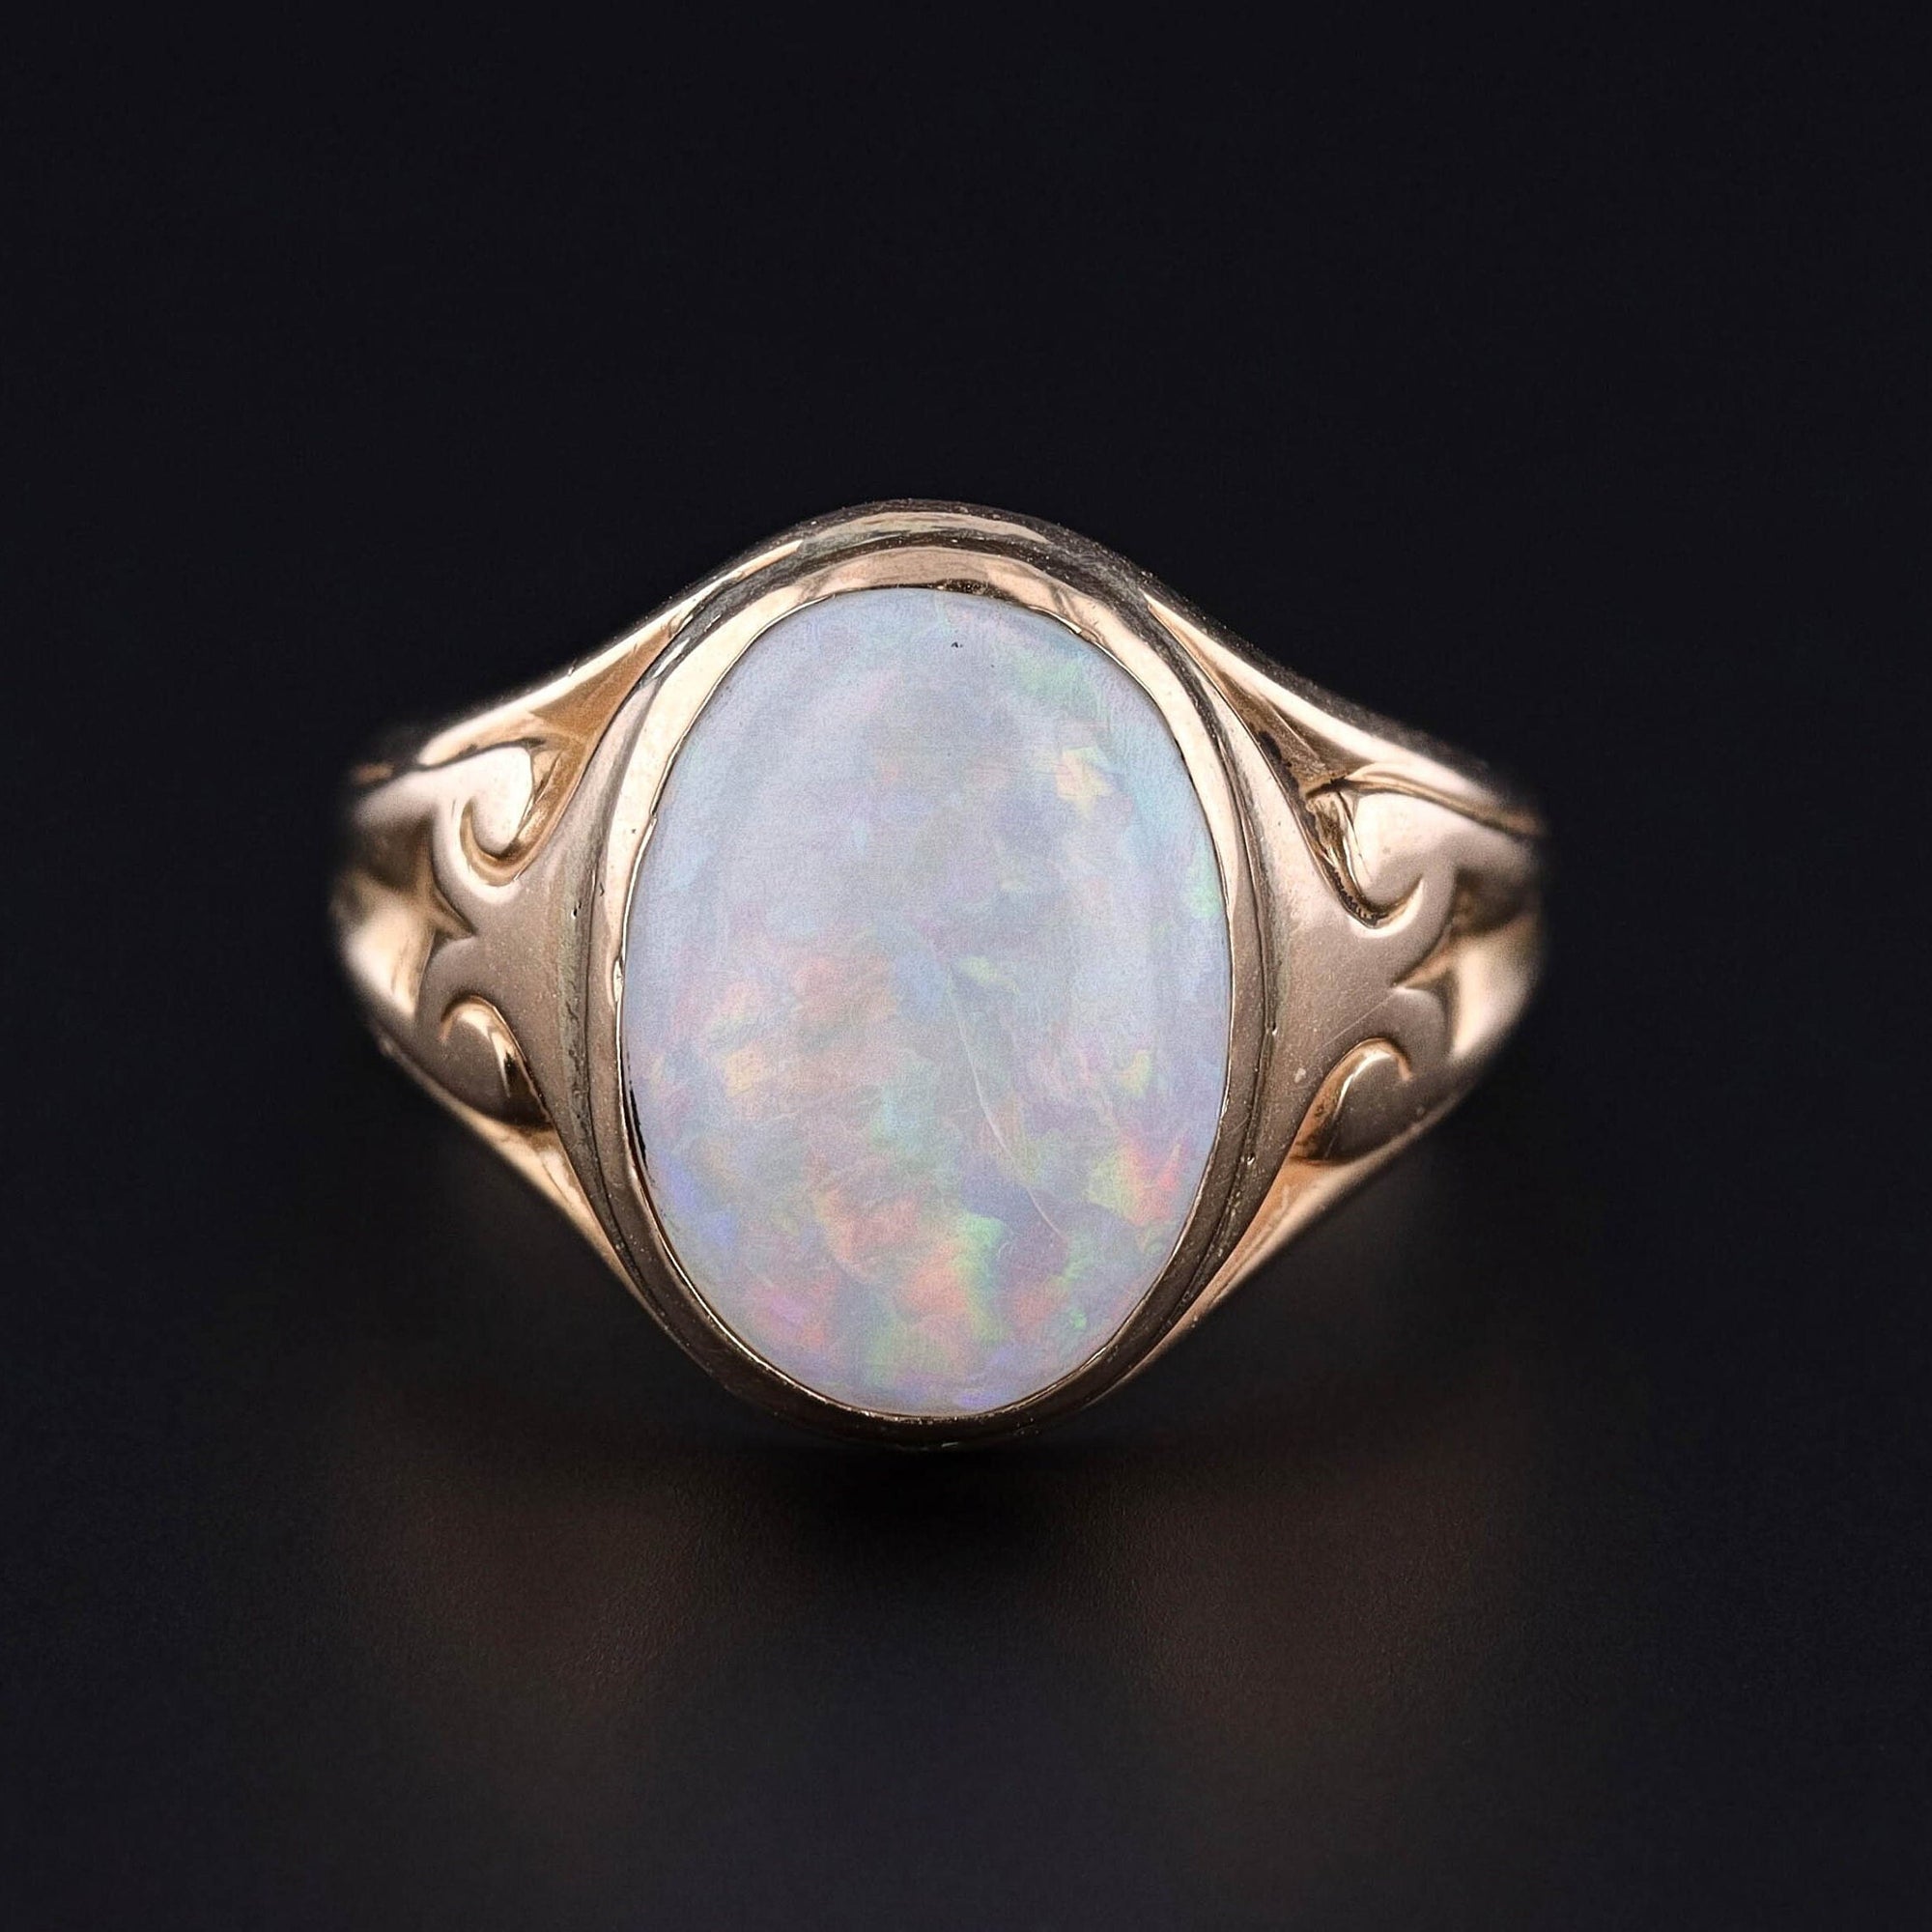 Antique Opal Ring of 14k Gold